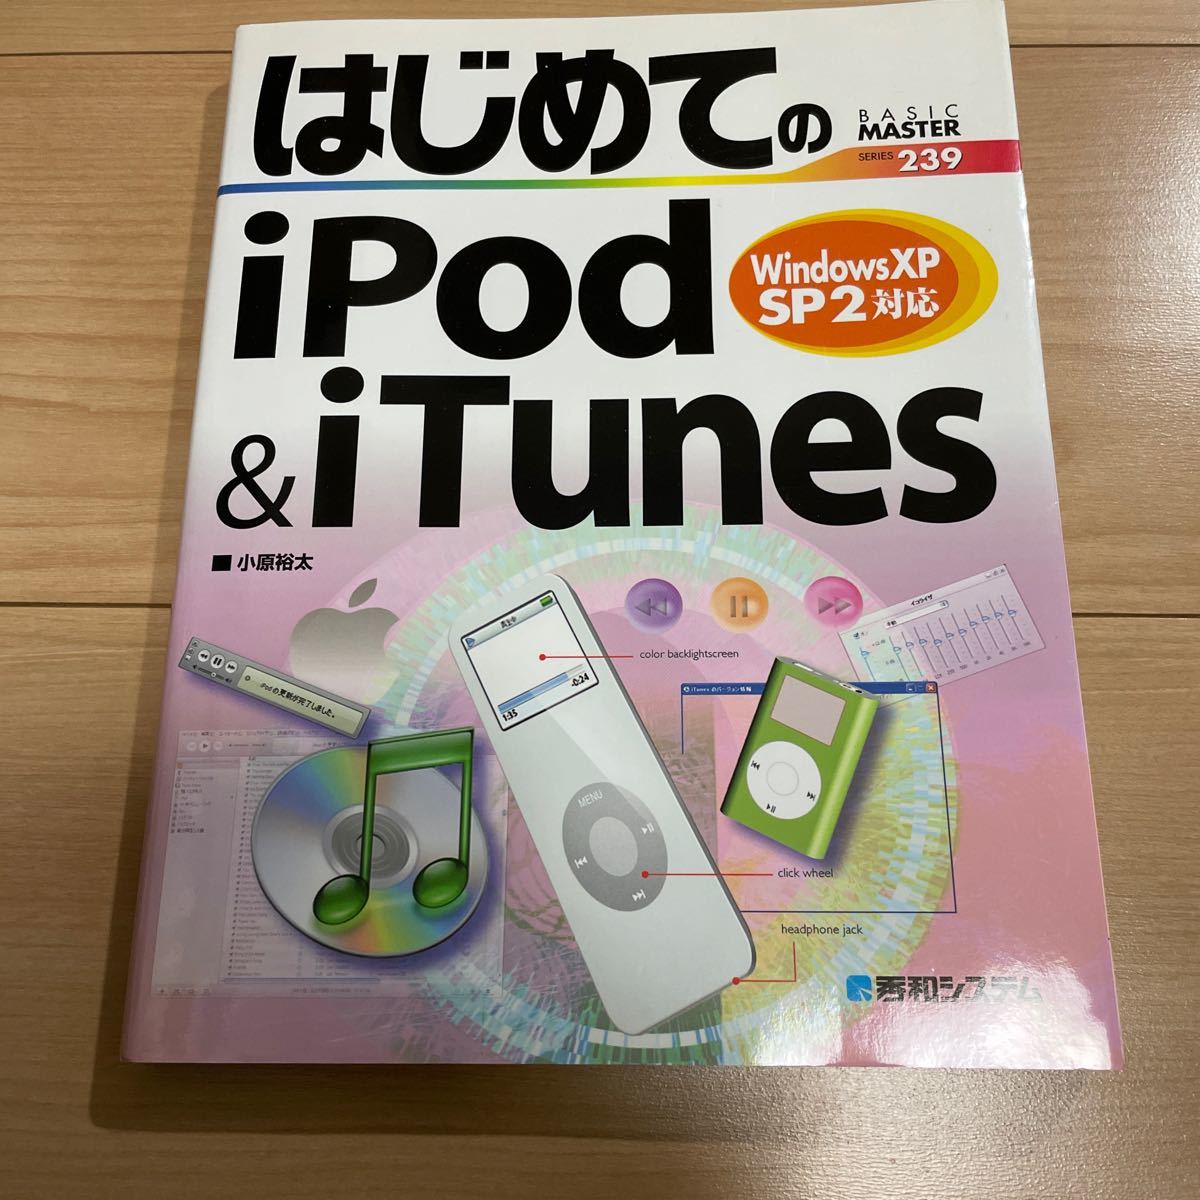  start .. iPod & iTunes (Basic master series 239) small .. futoshi | work 